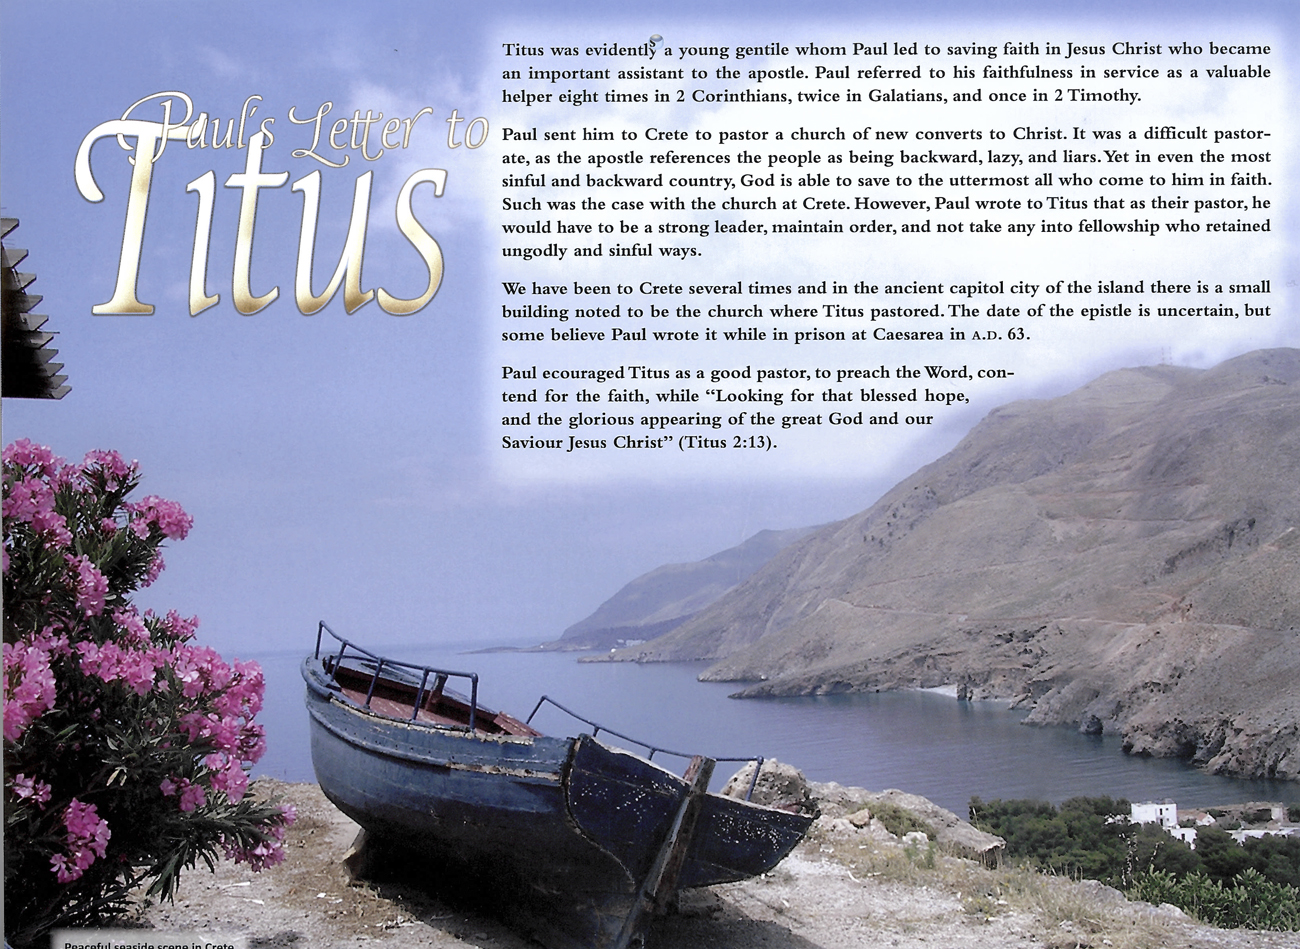 2012 Prophecy Calendar: November - Paul's Letter to Titus